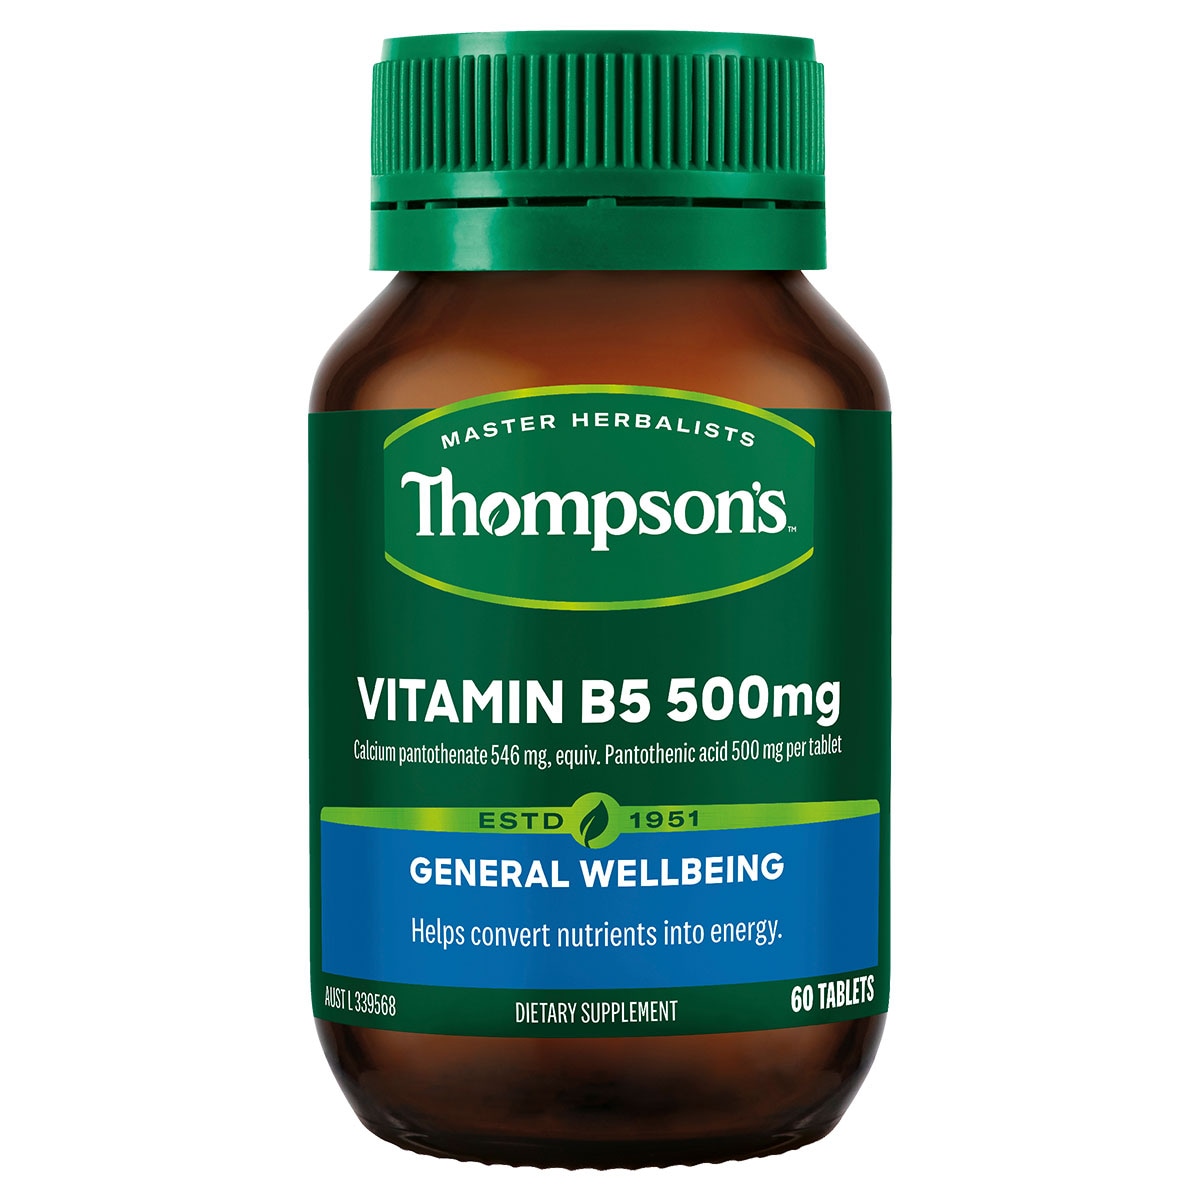 Thompsons Vitamin B5 500mg 60 Tablets Australia